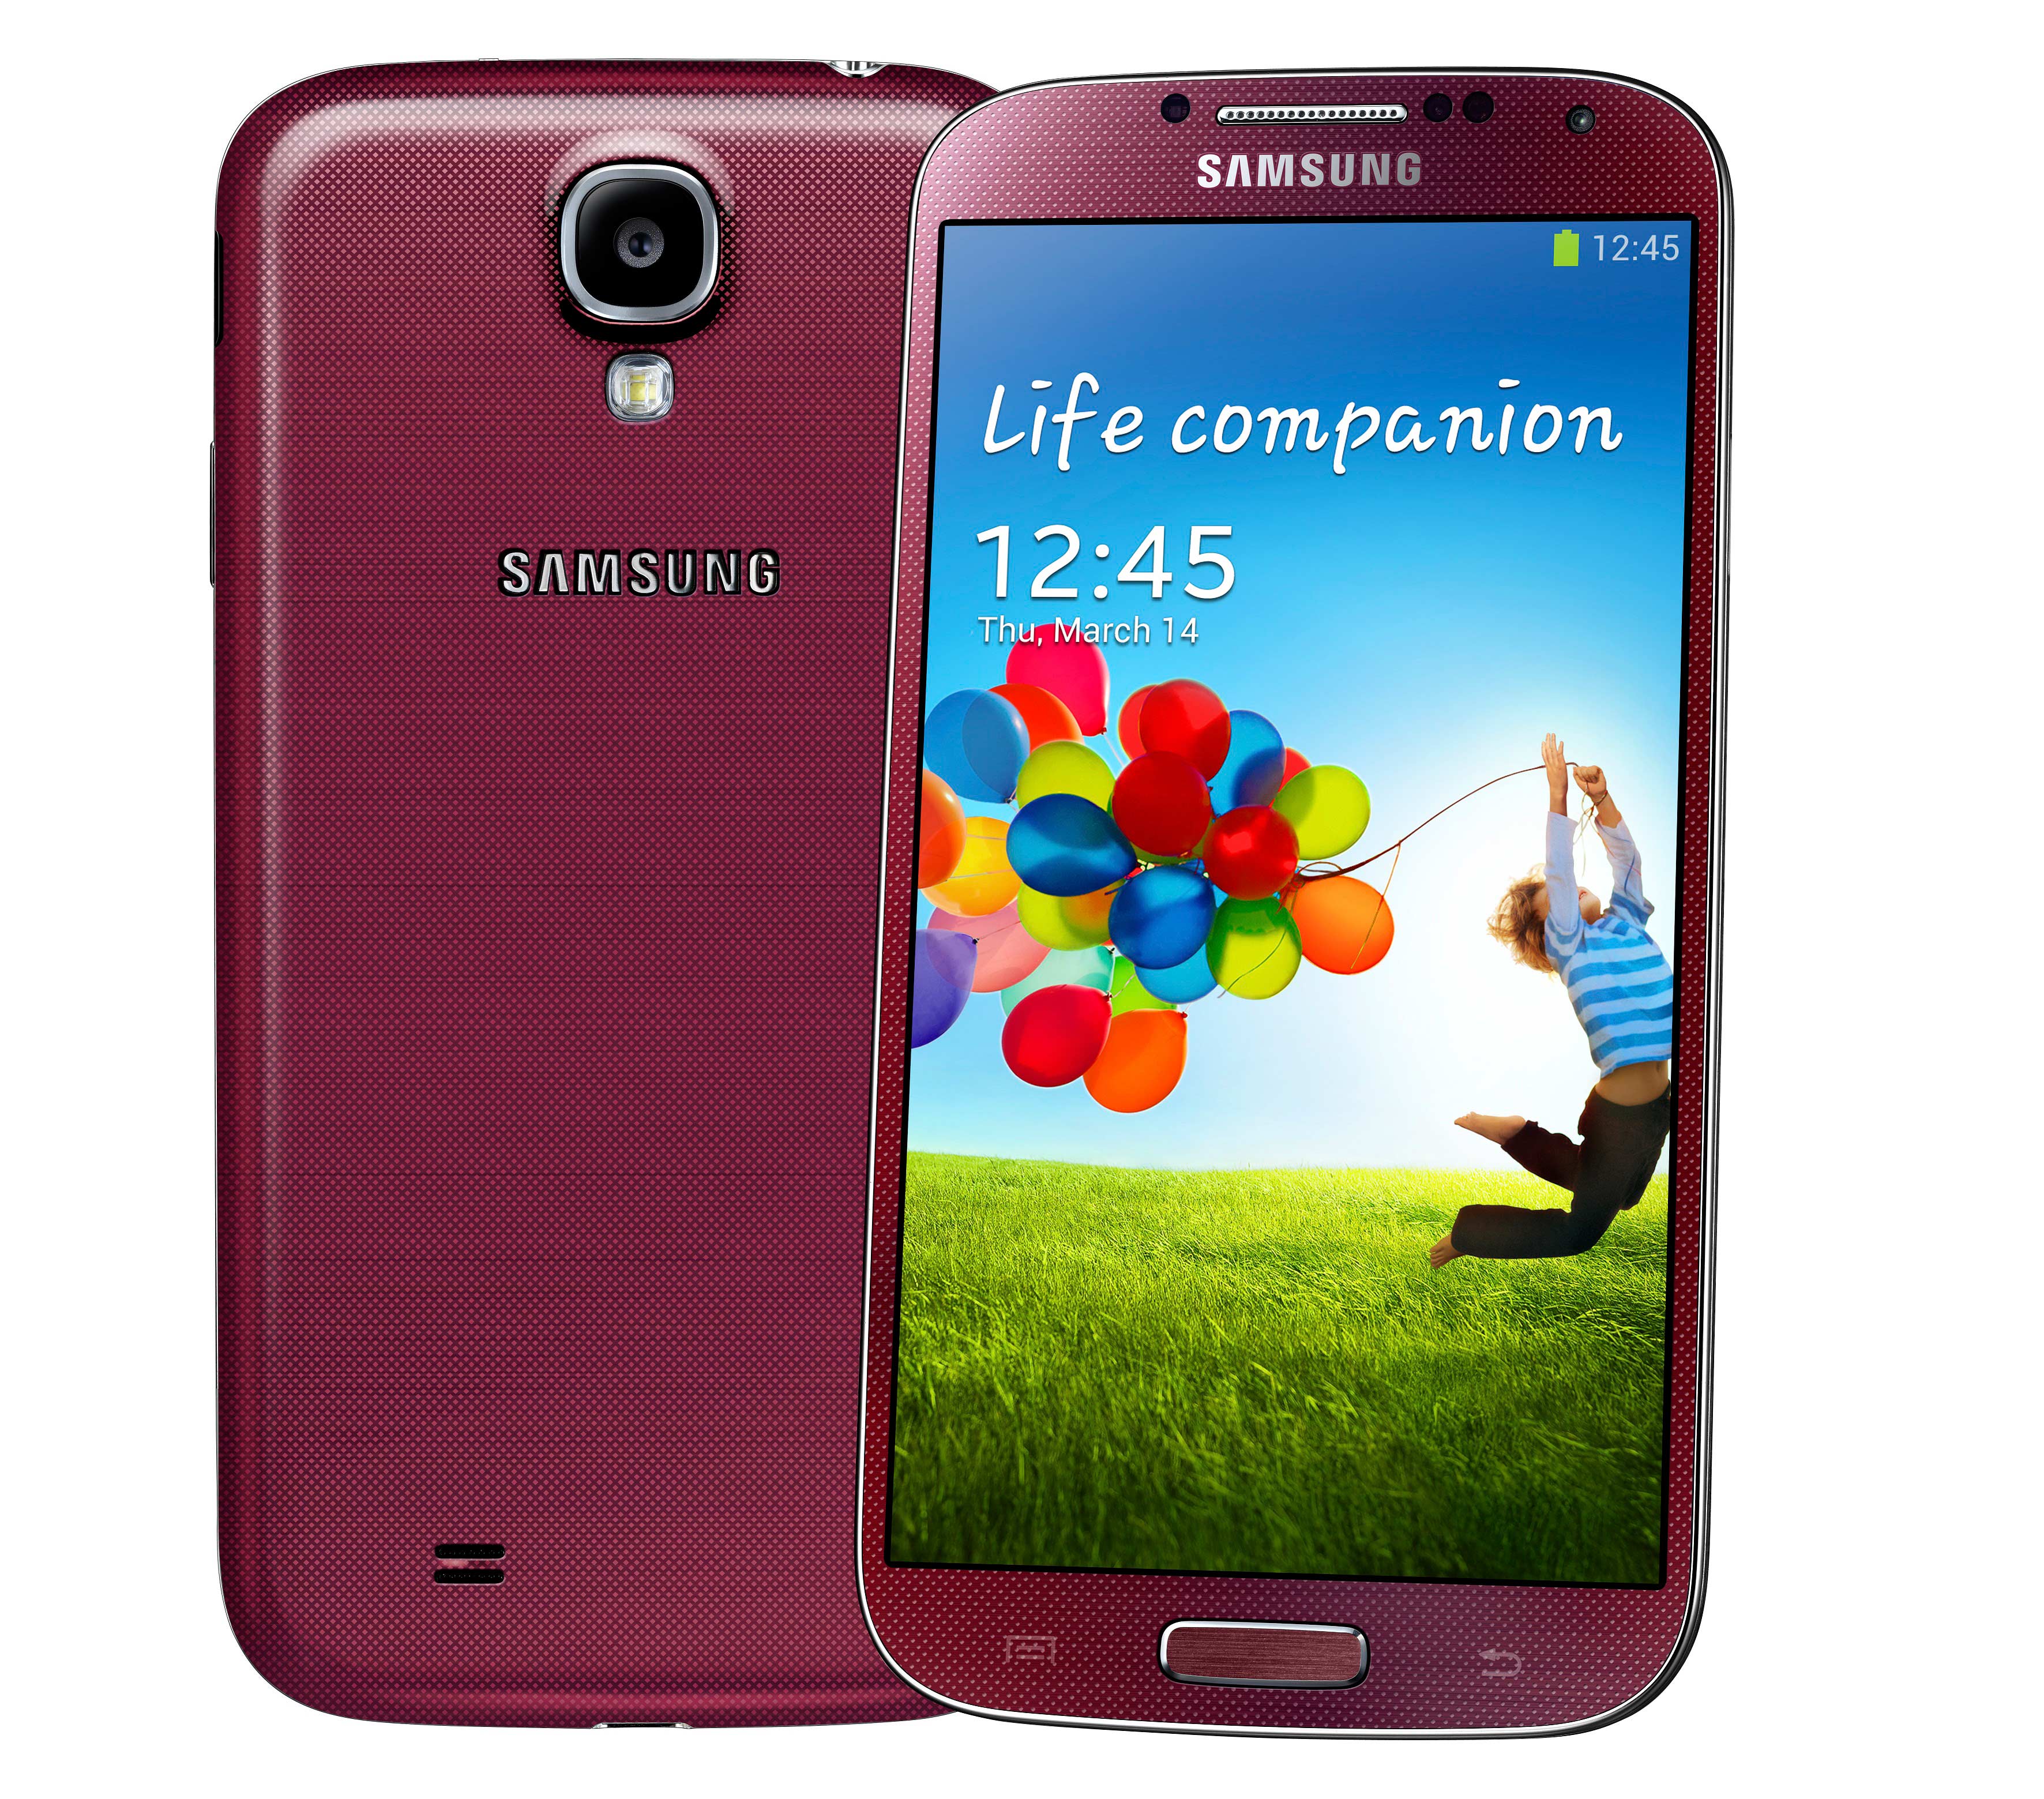 Самсунг а01 память. Samsung Galaxy s4 gt-i9500. Samsung Galaxy s4 16gb i9500. Samsung Galaxy s4 gt-i9500 16gb. Samsung Galaxy s4 2013.